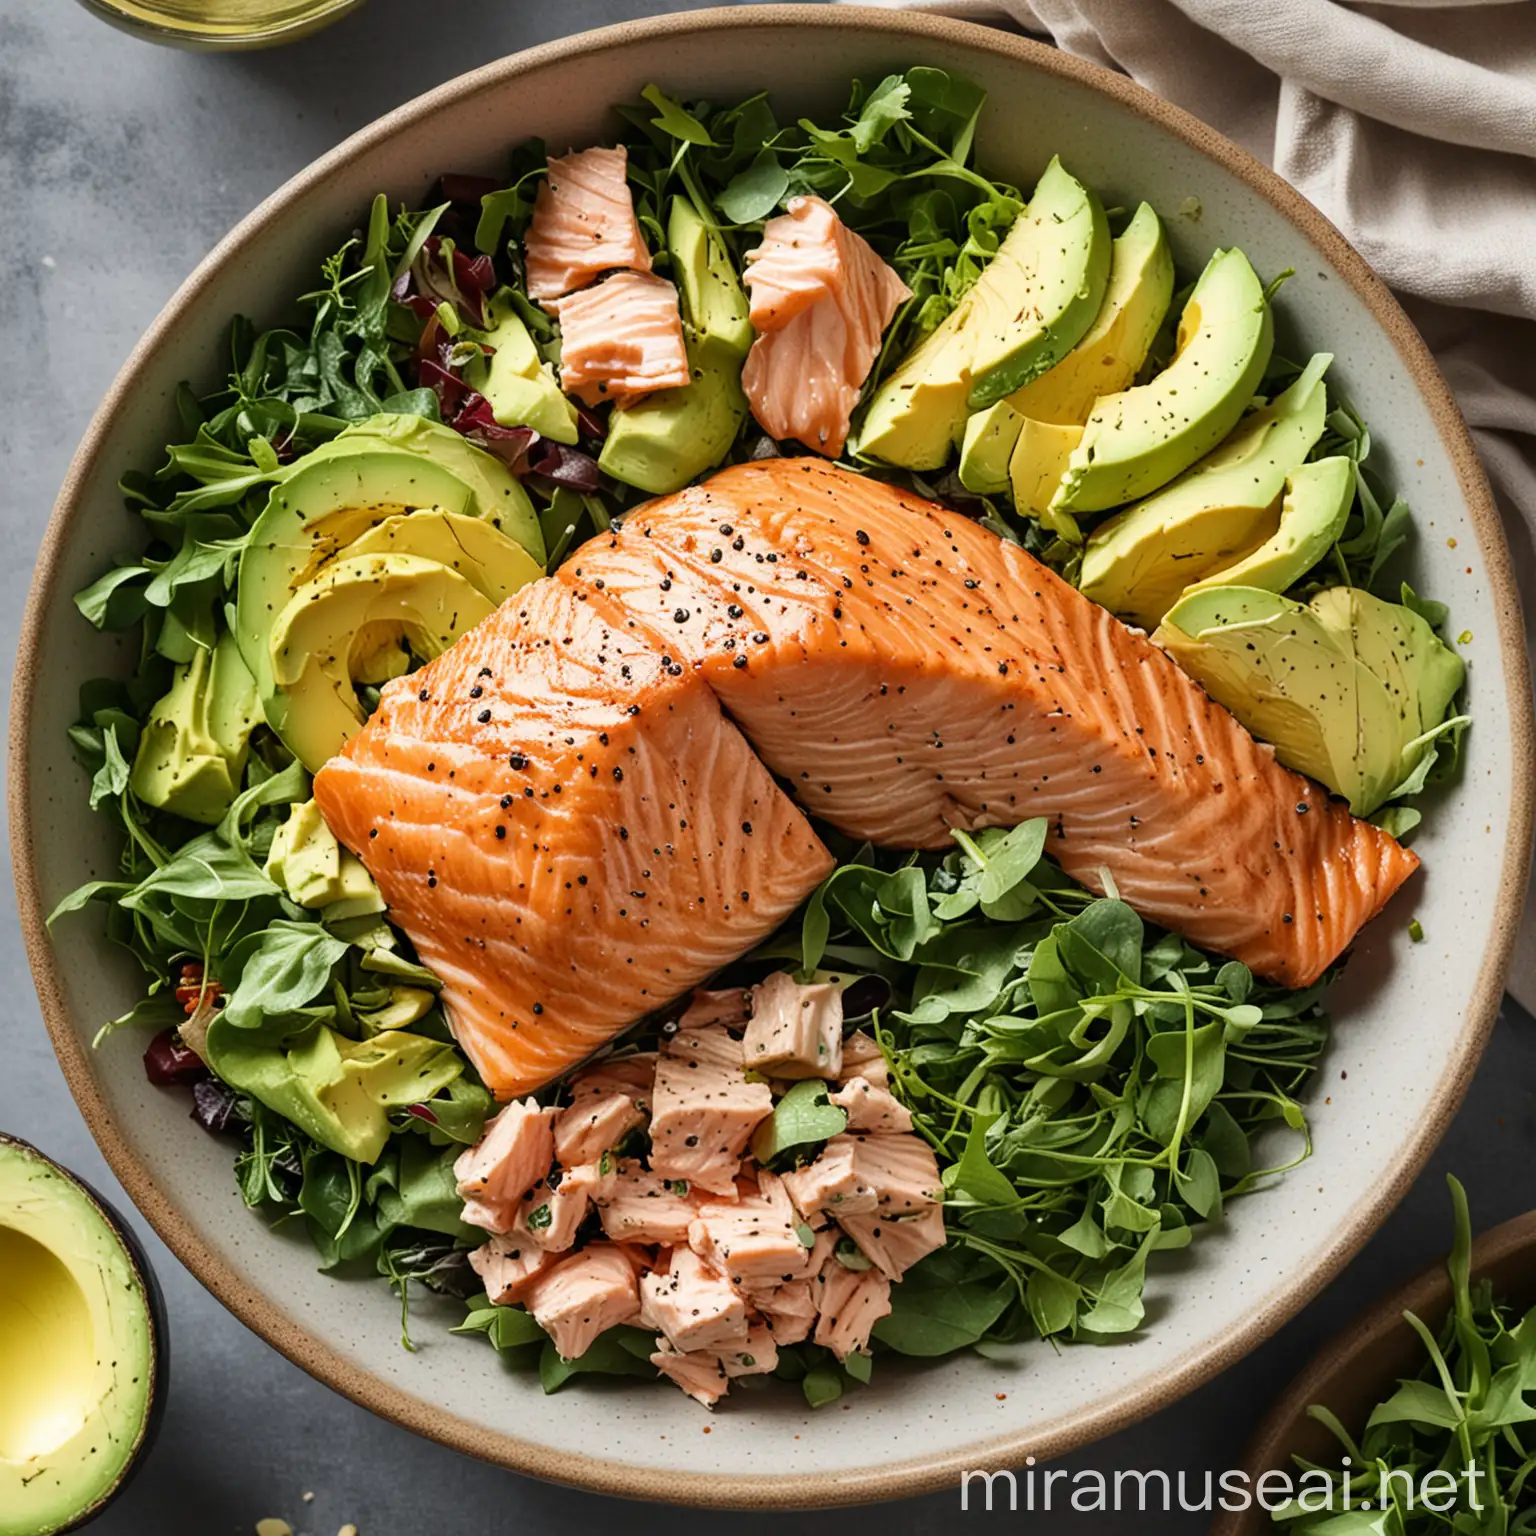 Healthy Salmon Salad Bowl with Avocado and Greens